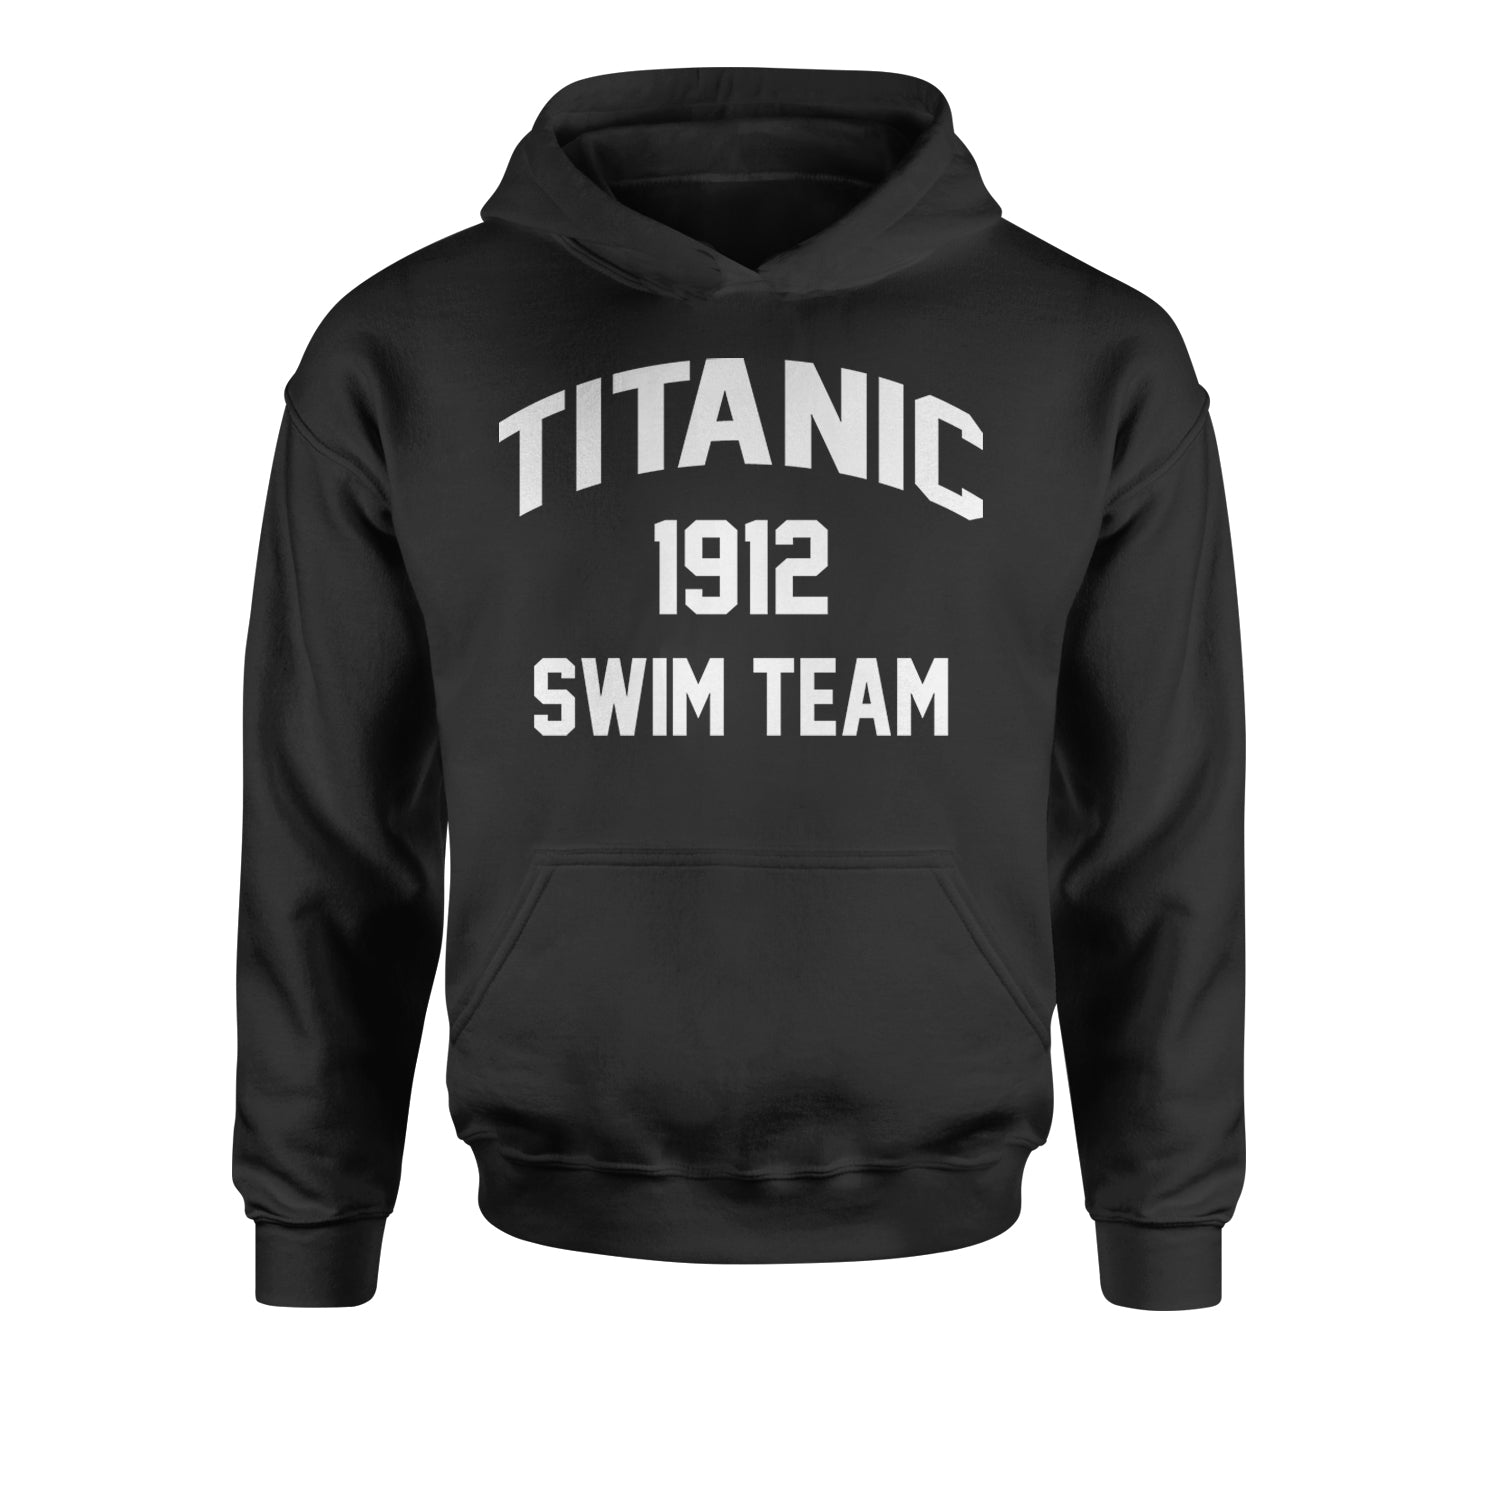 Titanic Swim Team 1912 Funny Cruise Youth-Sized Hoodie